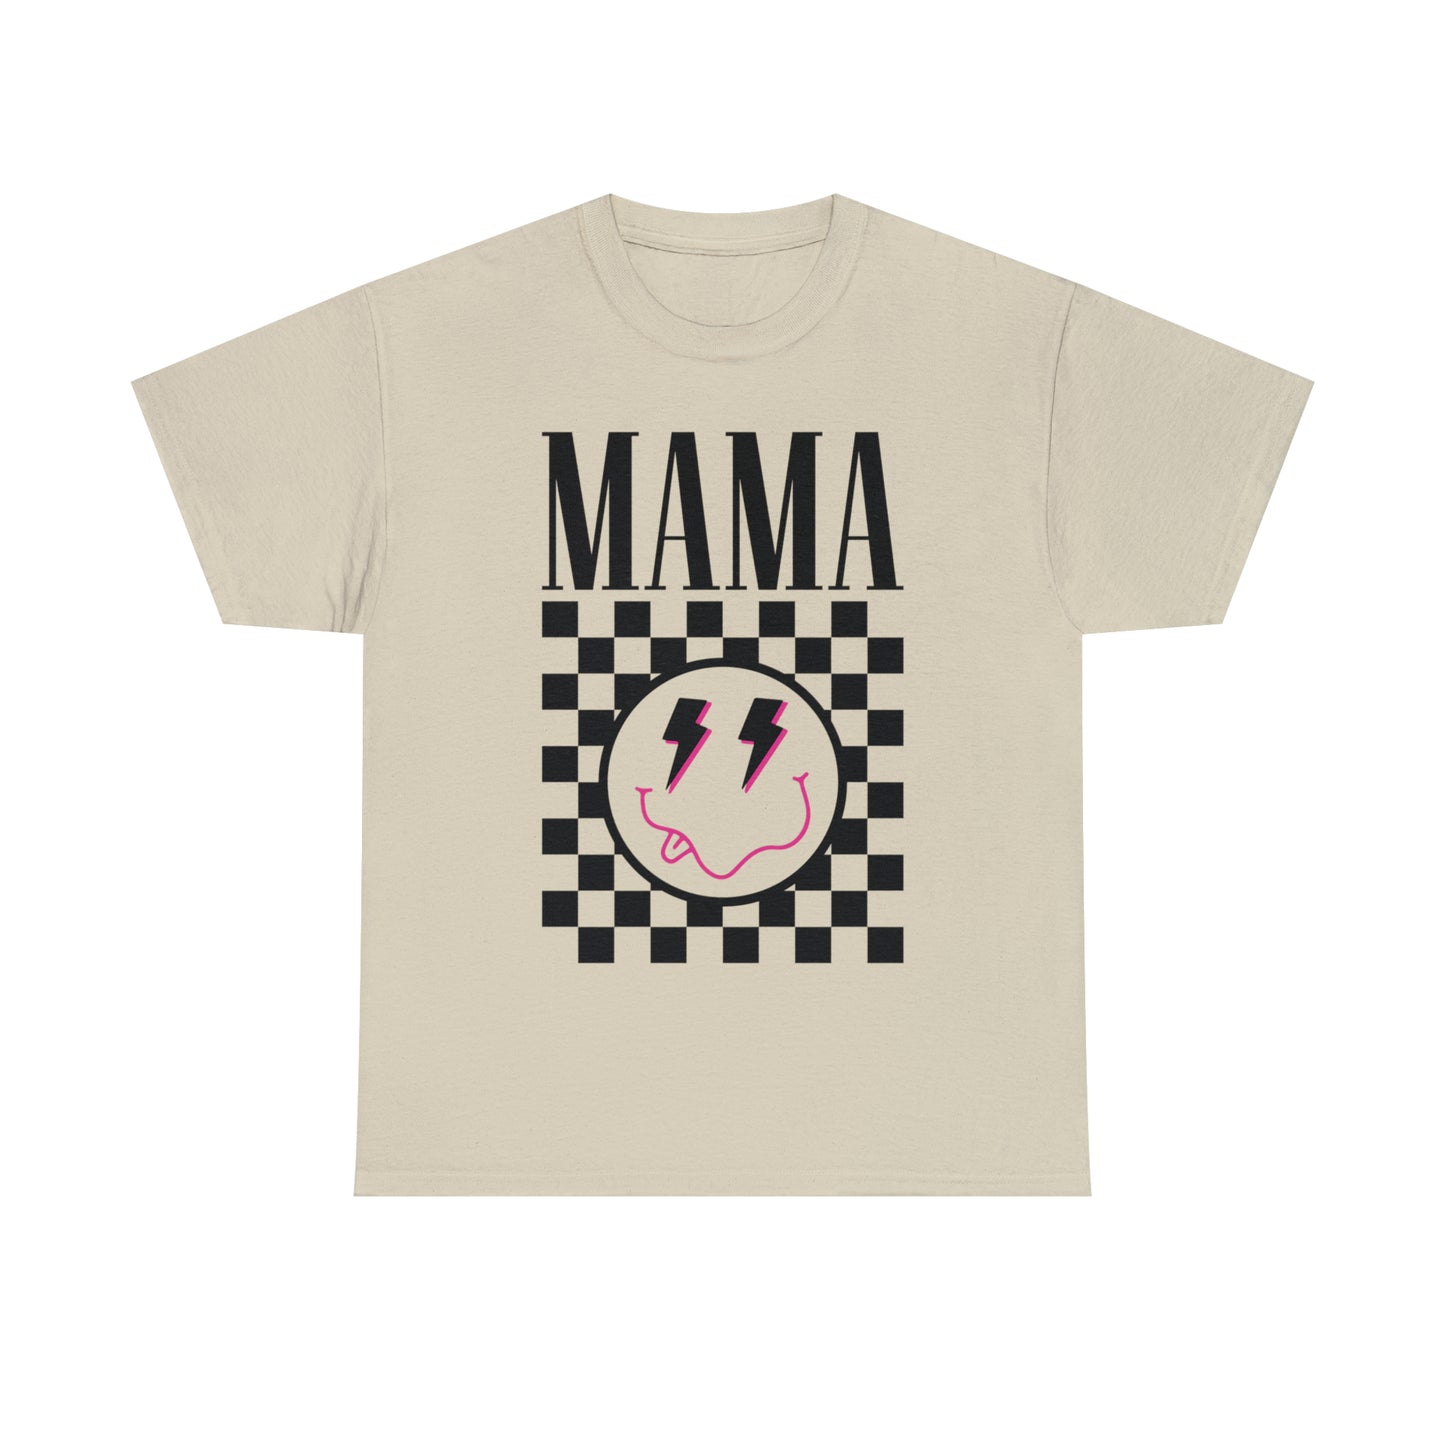 Mama Lighting Bolt Pink Smile Face (front) - Unisex T-shirt